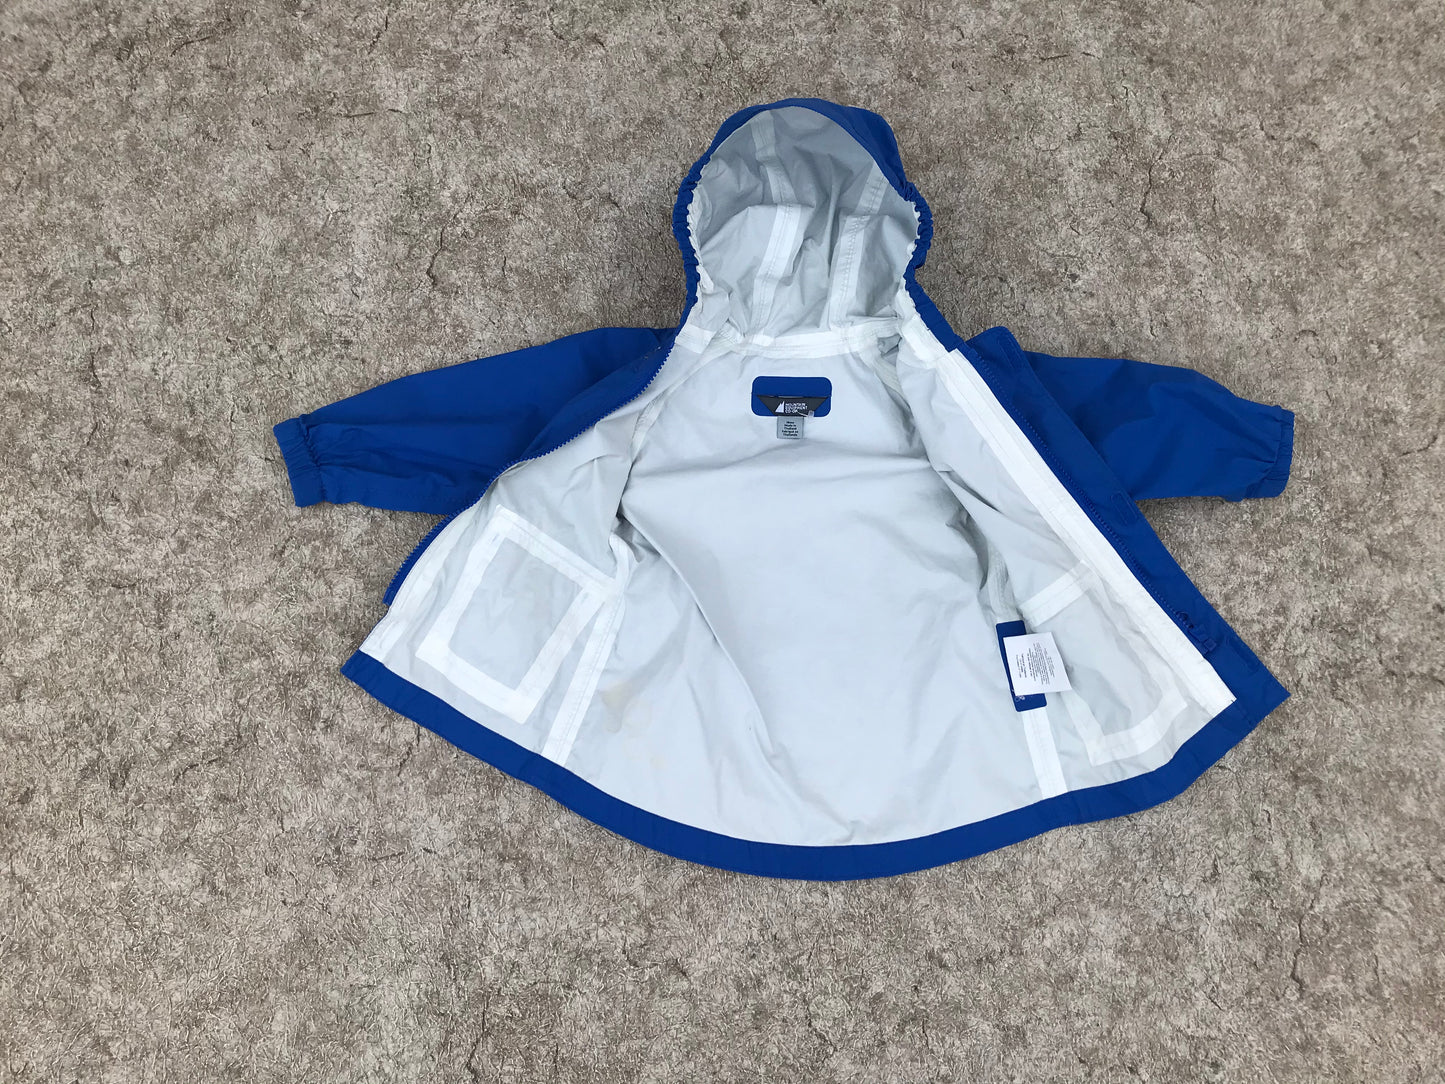 Rain Coat Child Size 18 mth MEC Blue Waterproof